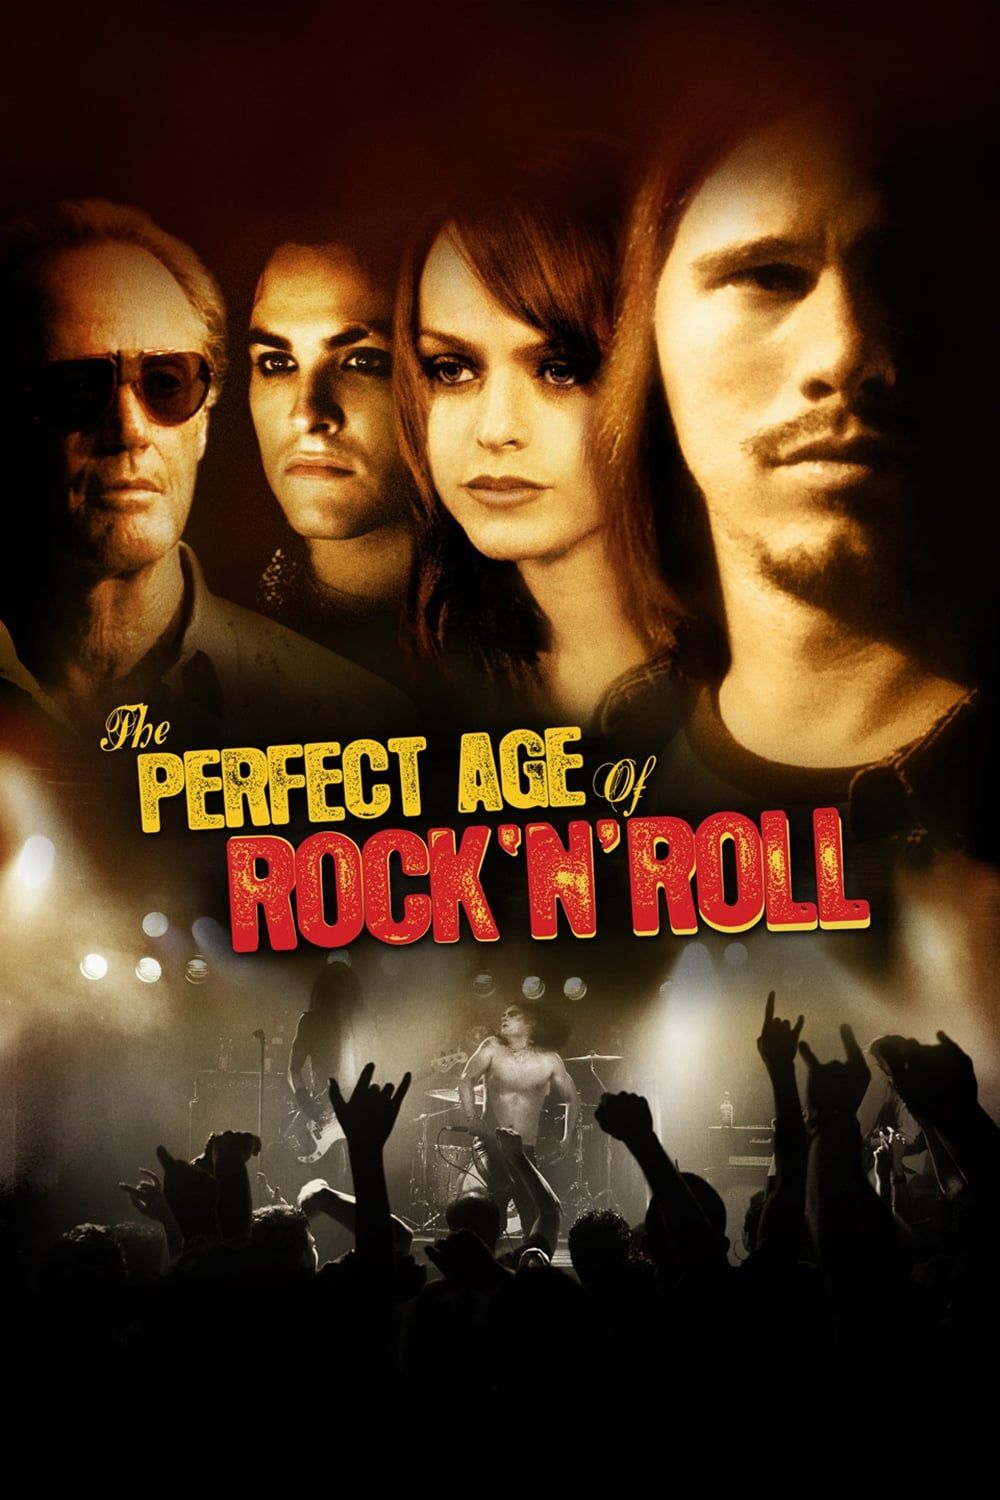 The Rock, Full Movie